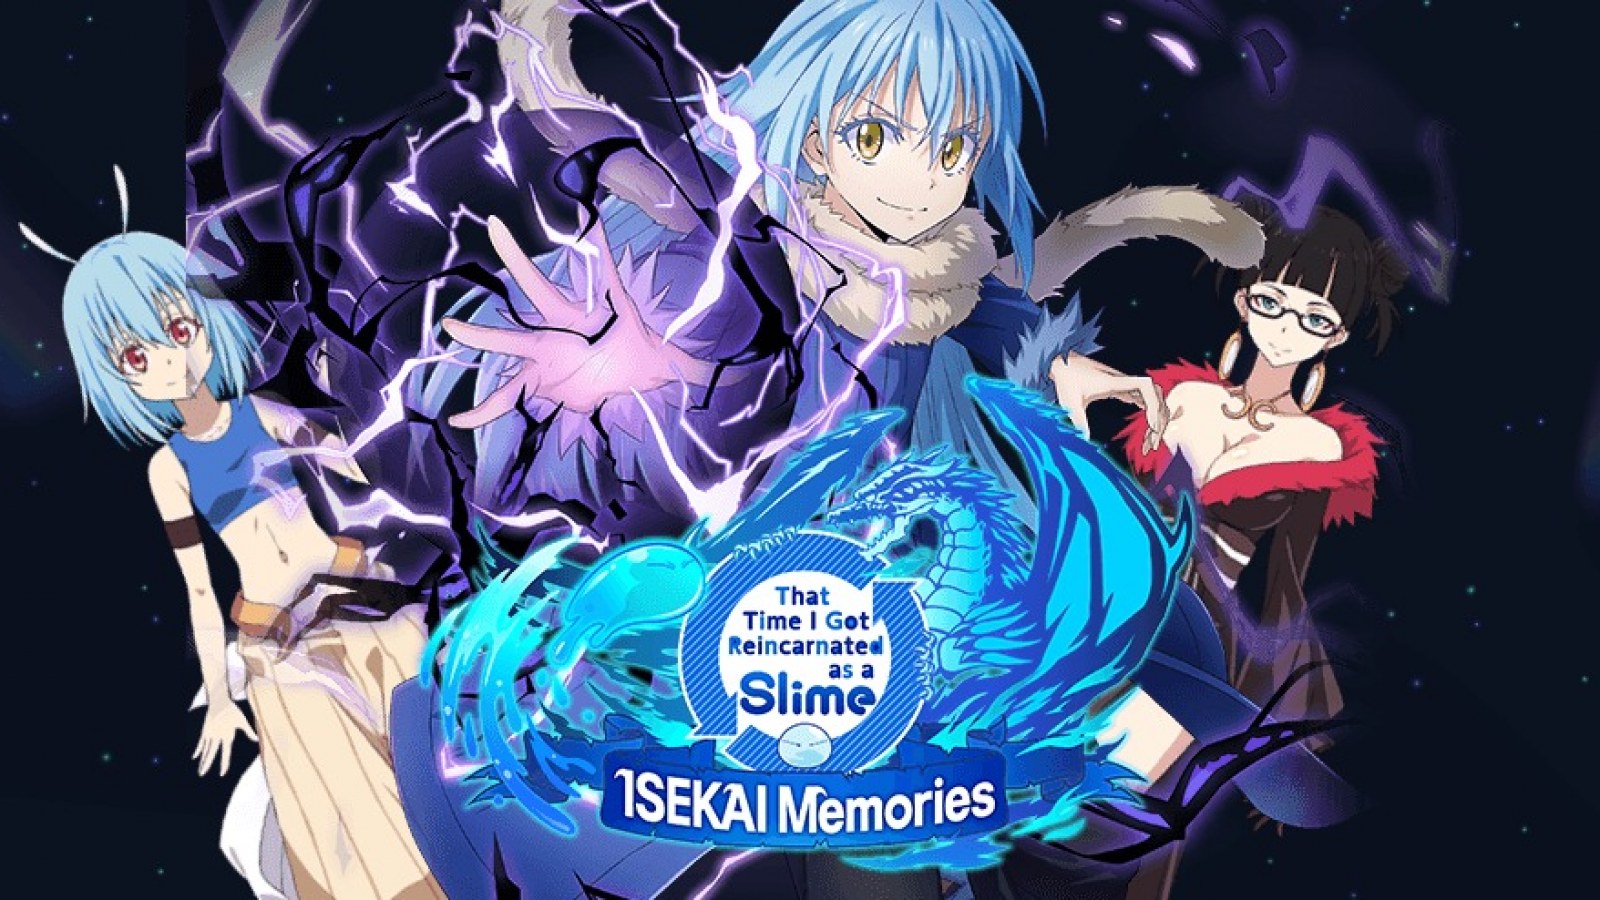 That time I got reincarnated as a slime ISEKAI Memories